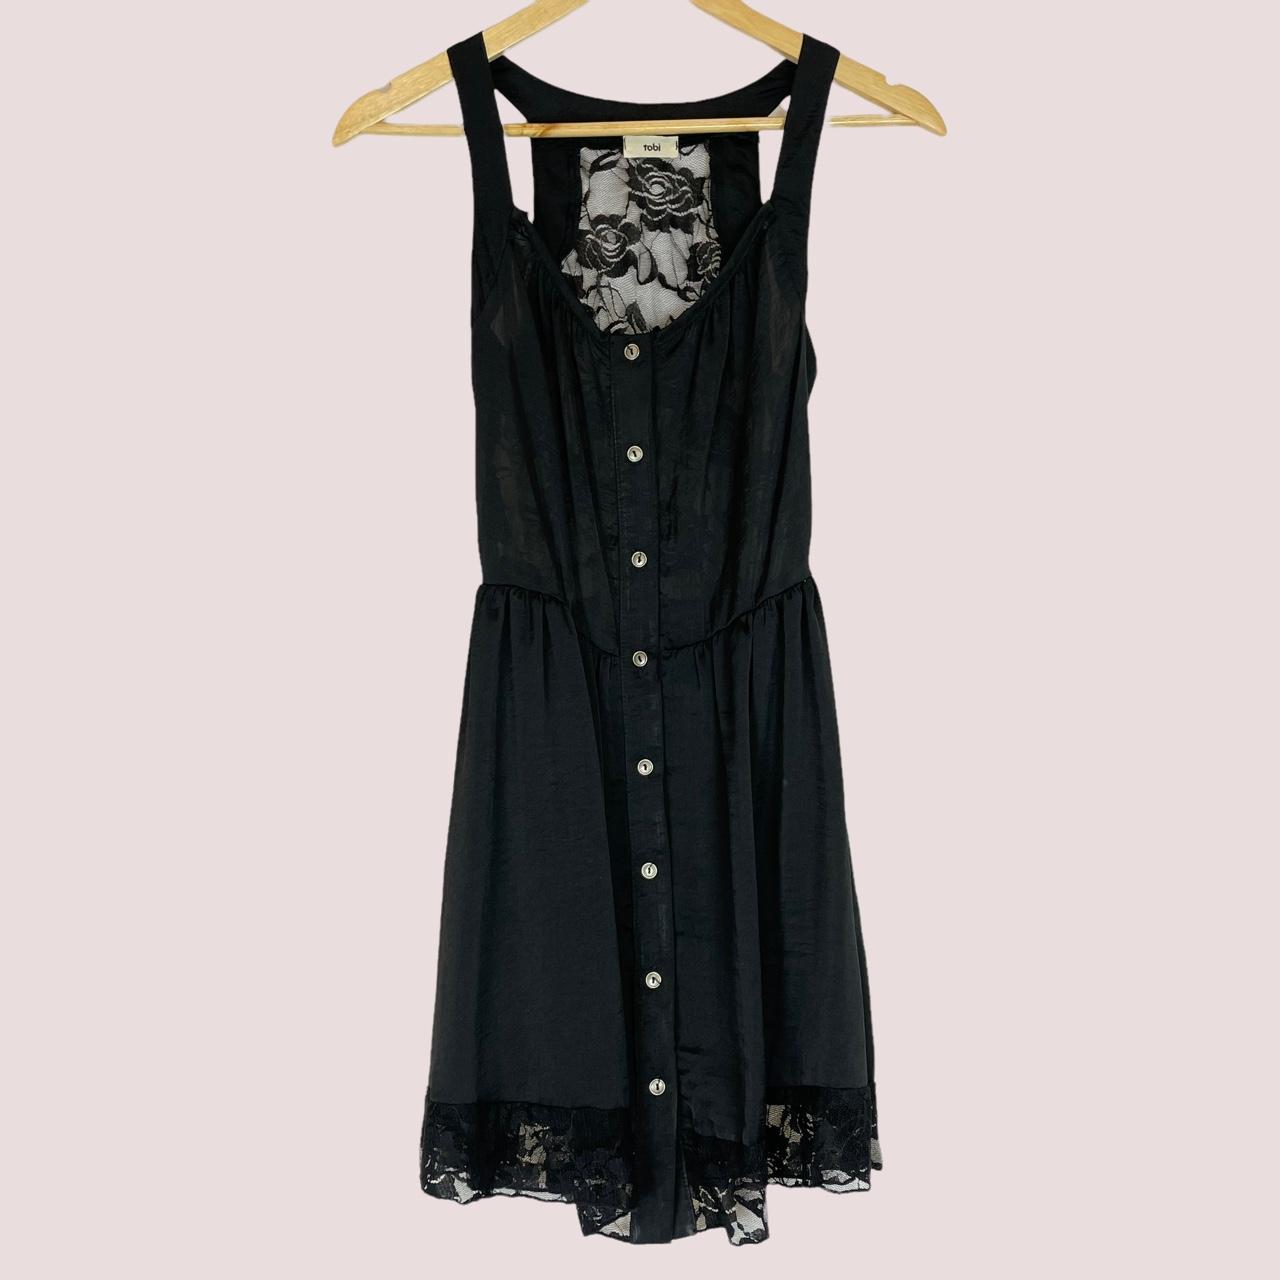 Tobi Black Lace Dress Sheer Back Sleeveless... - Depop